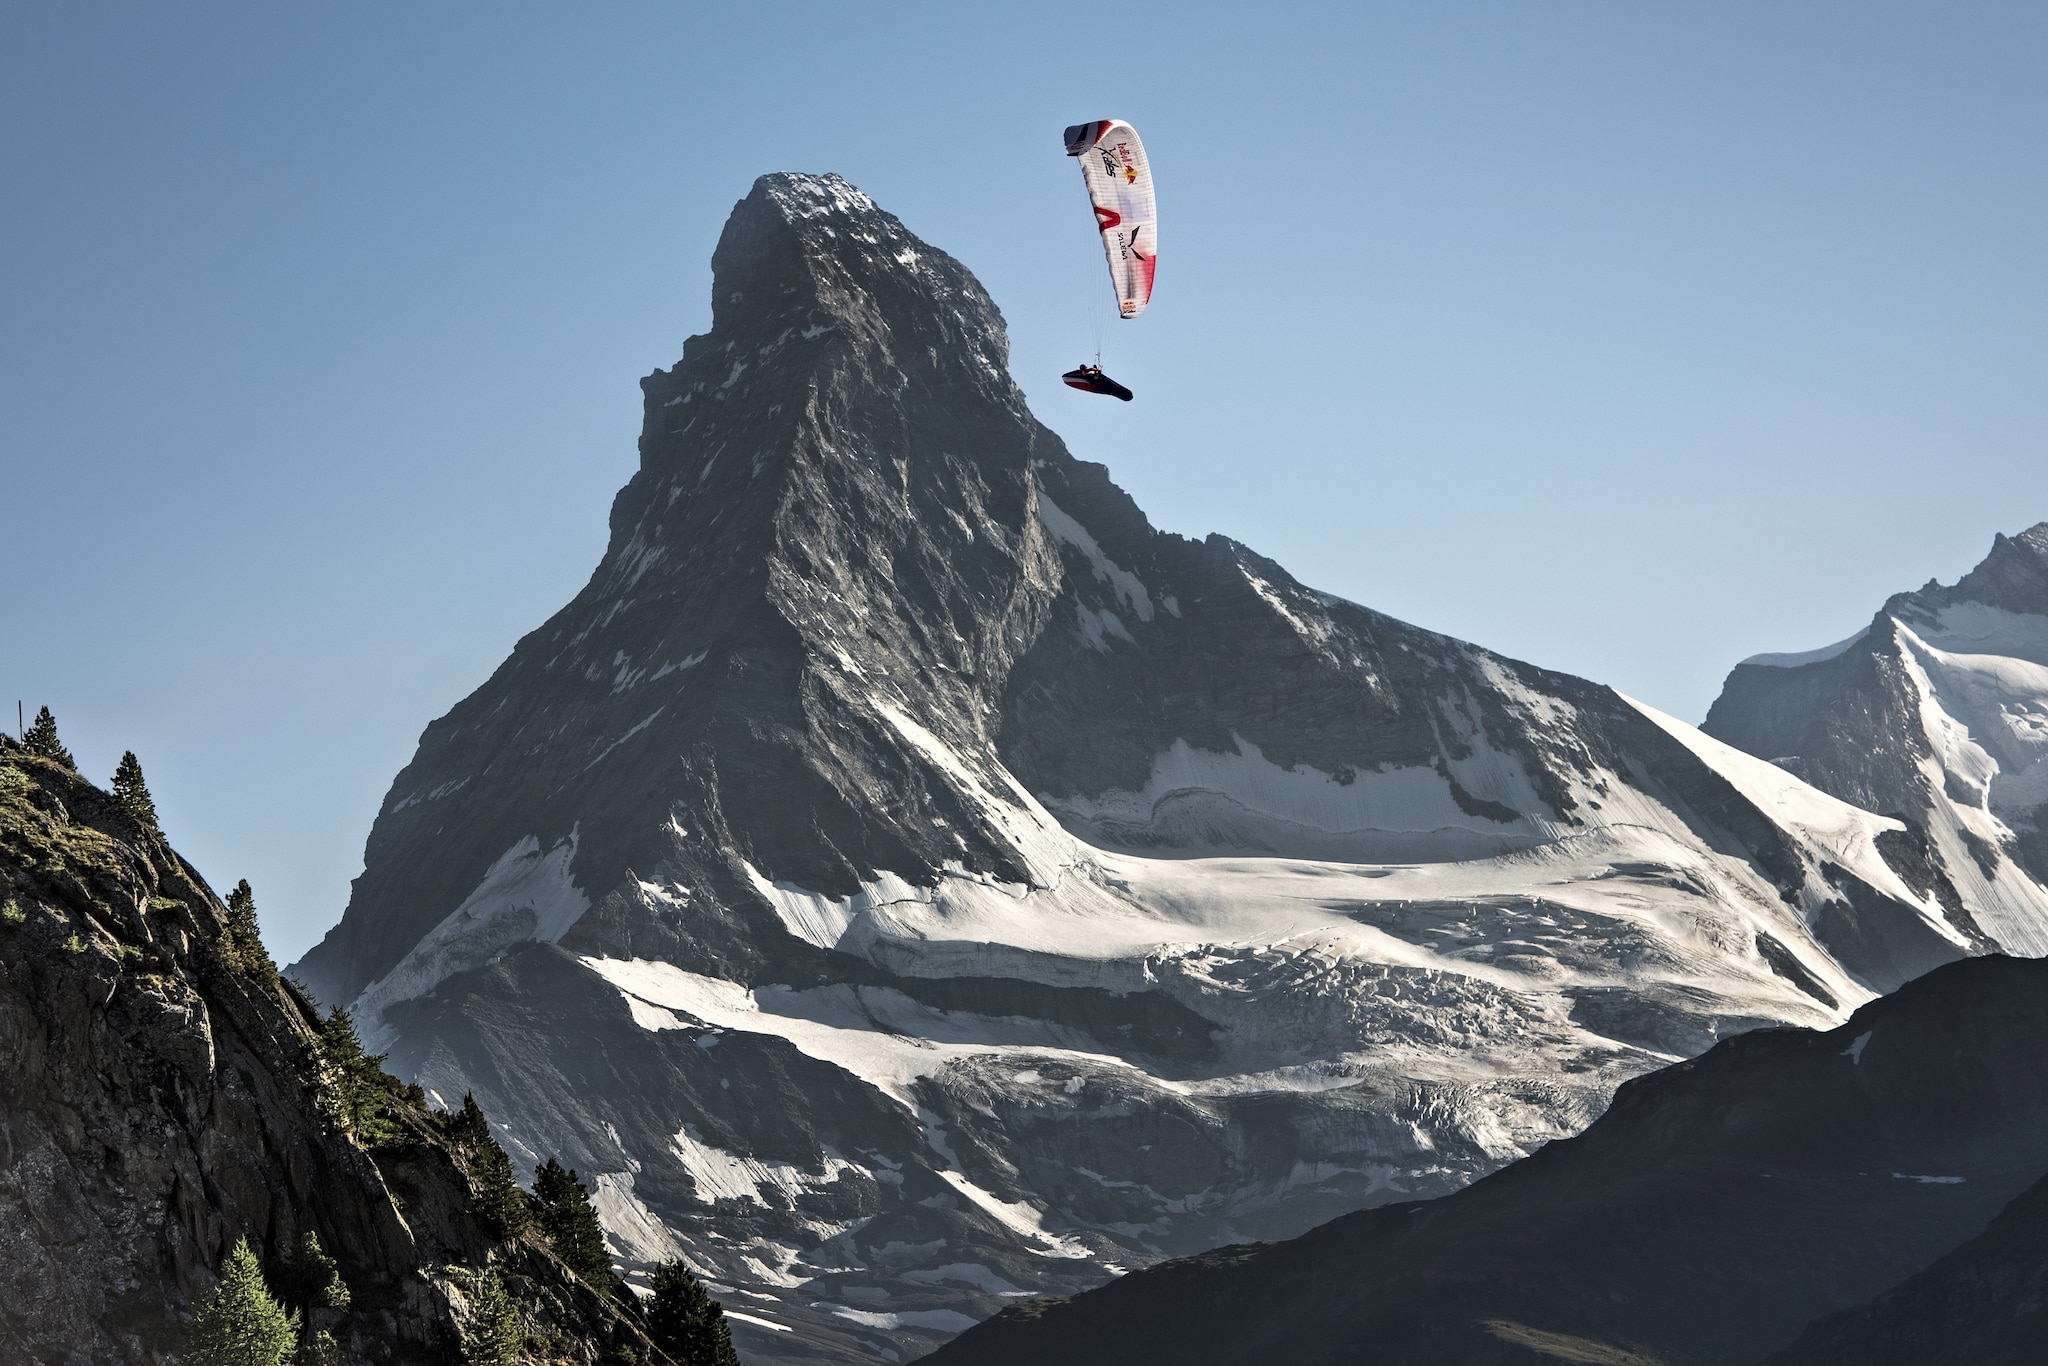 Paul Guschlbauer of Austria performs in front of the Matterhorn at the Red Bull X-Alps, Zermatt, Switzerland on July 10 2015.